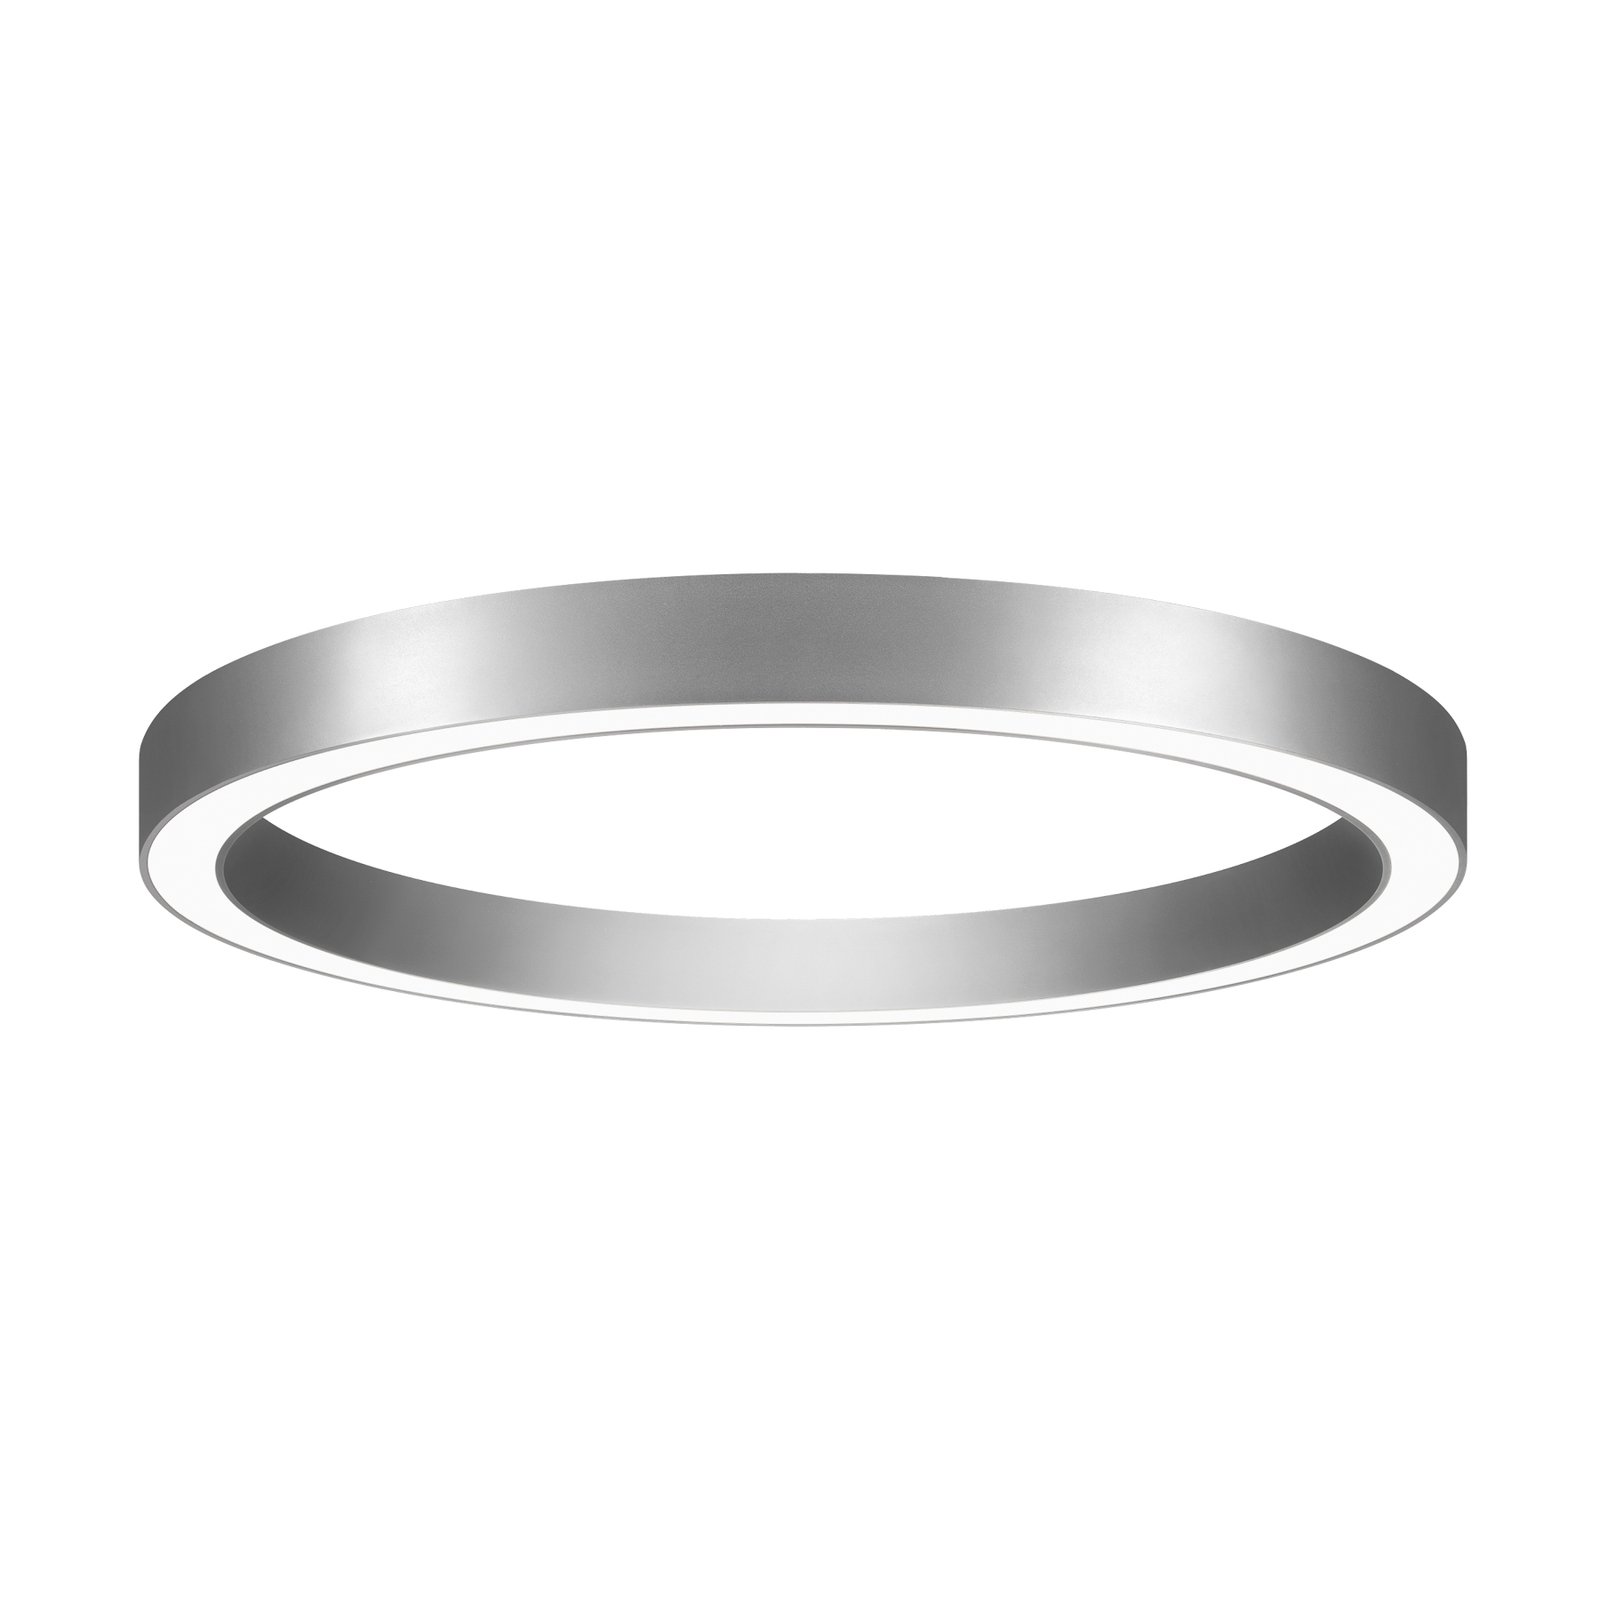 BRUMBERG Biro Circle Ring, Ø 45 cm, DALI, silver, 3,000 K